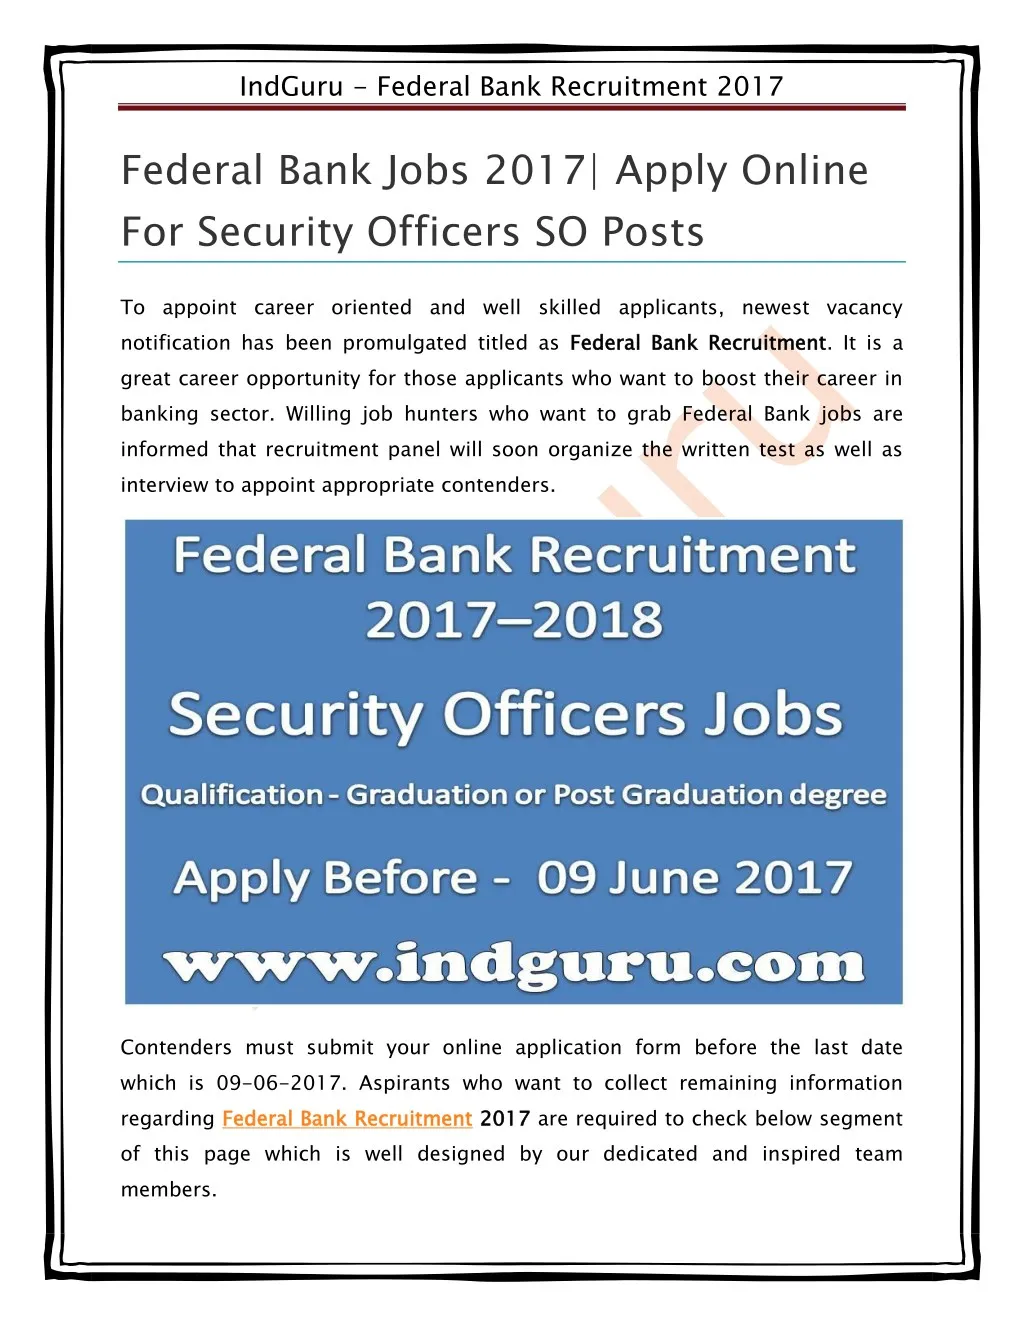 indguru federal bank recruitment 2017